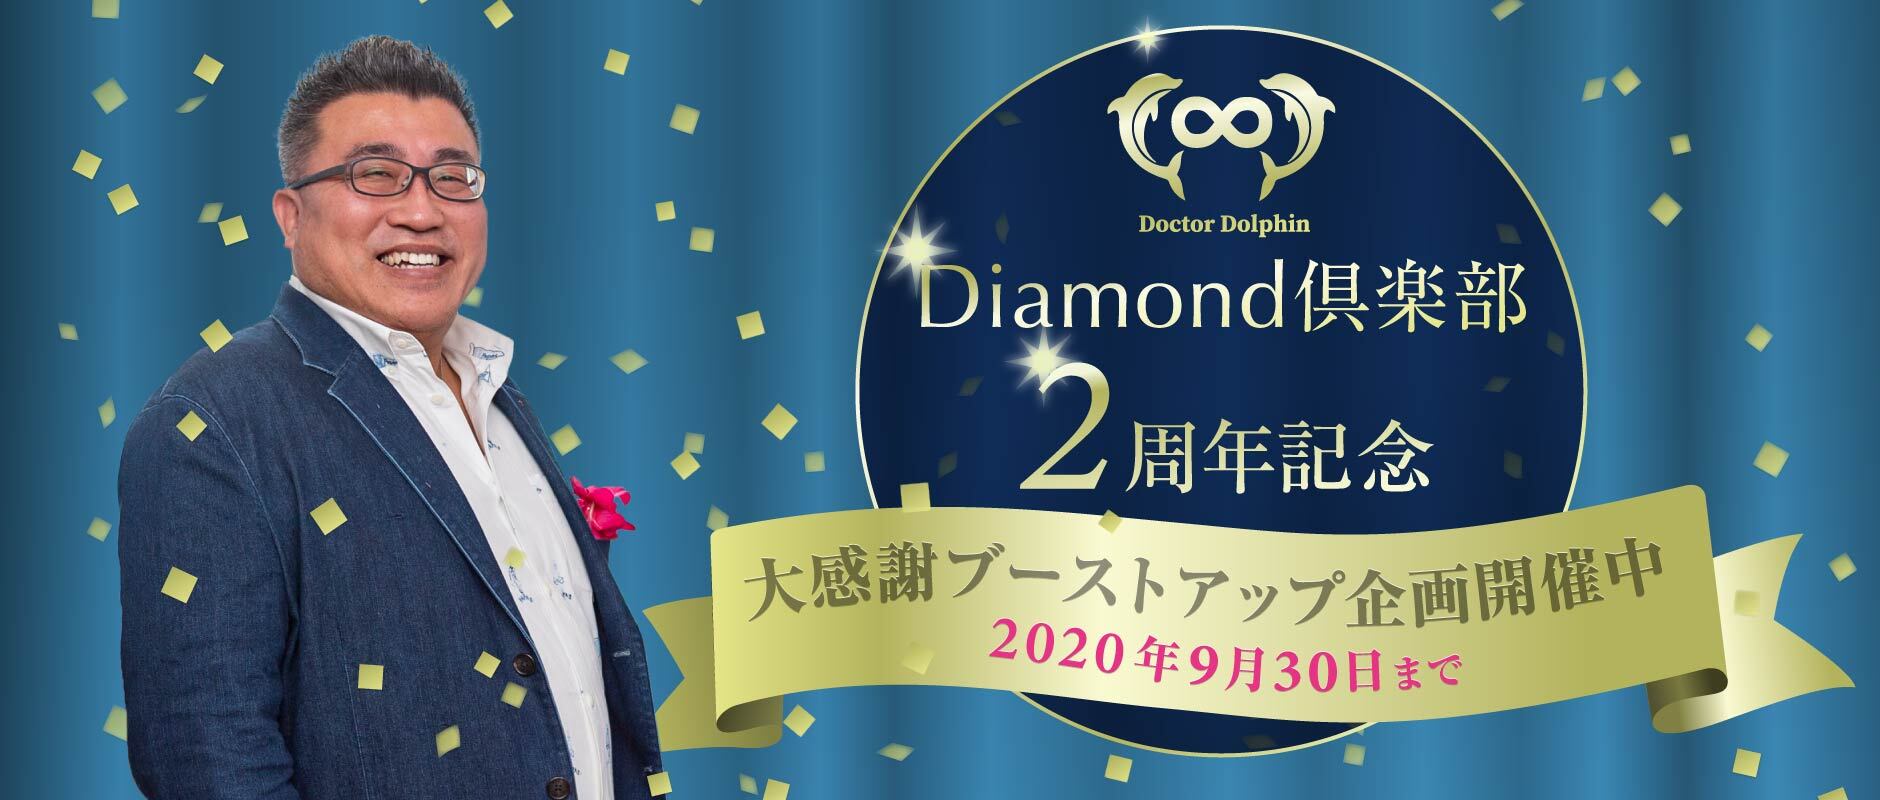 Diamond倶楽部2周年企画